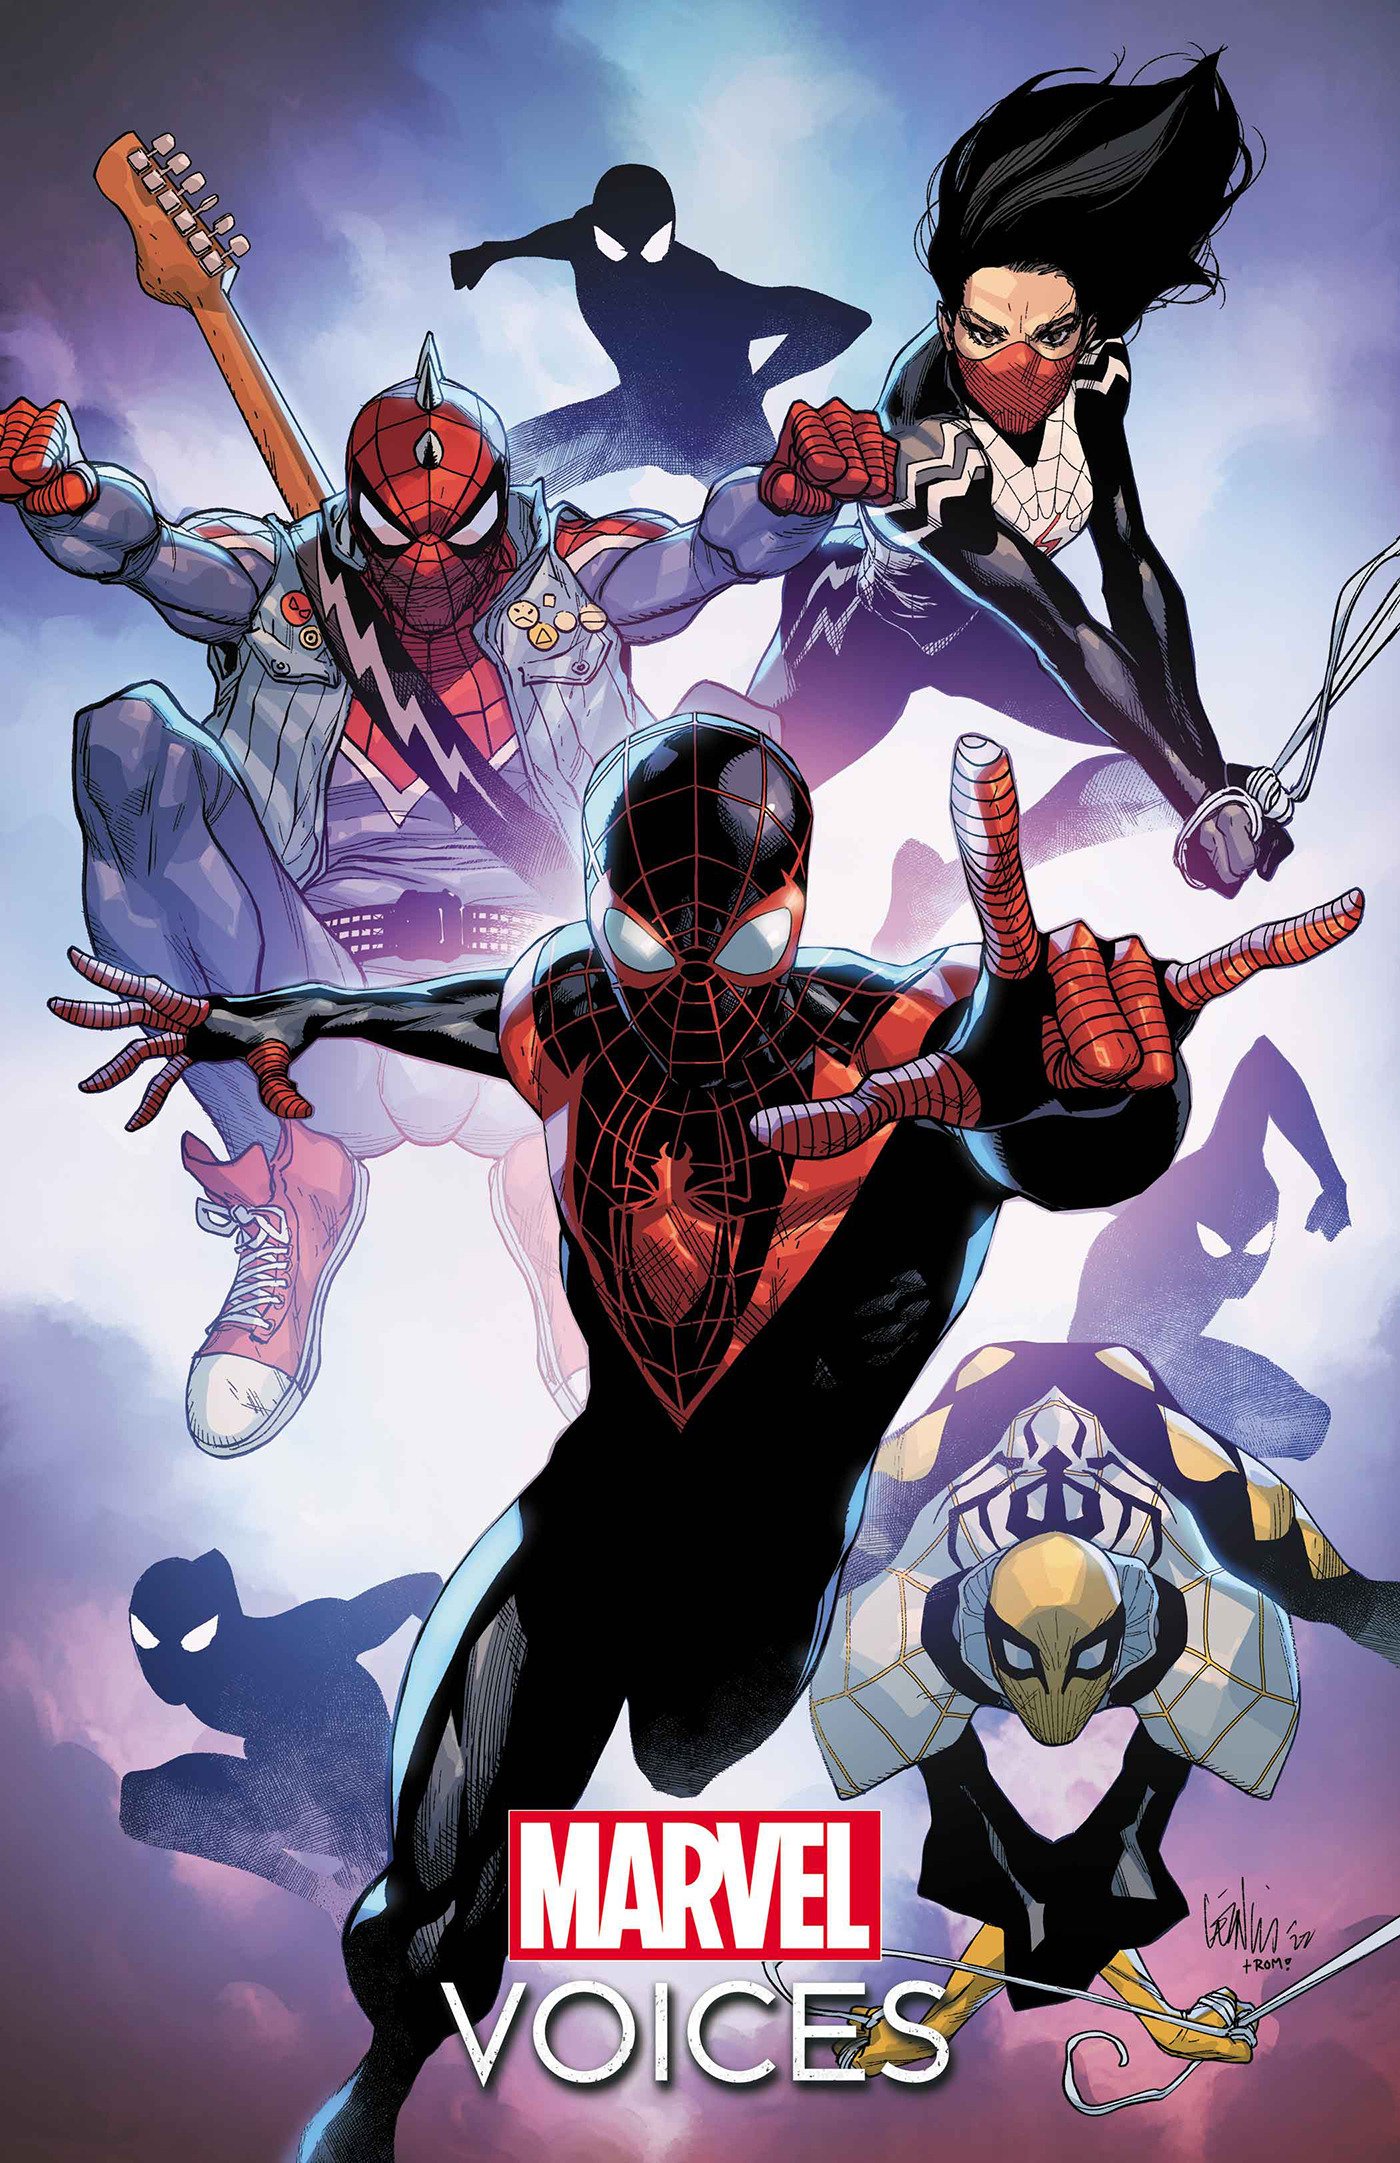 Marvels Voices Spider-Verse #1 Poster